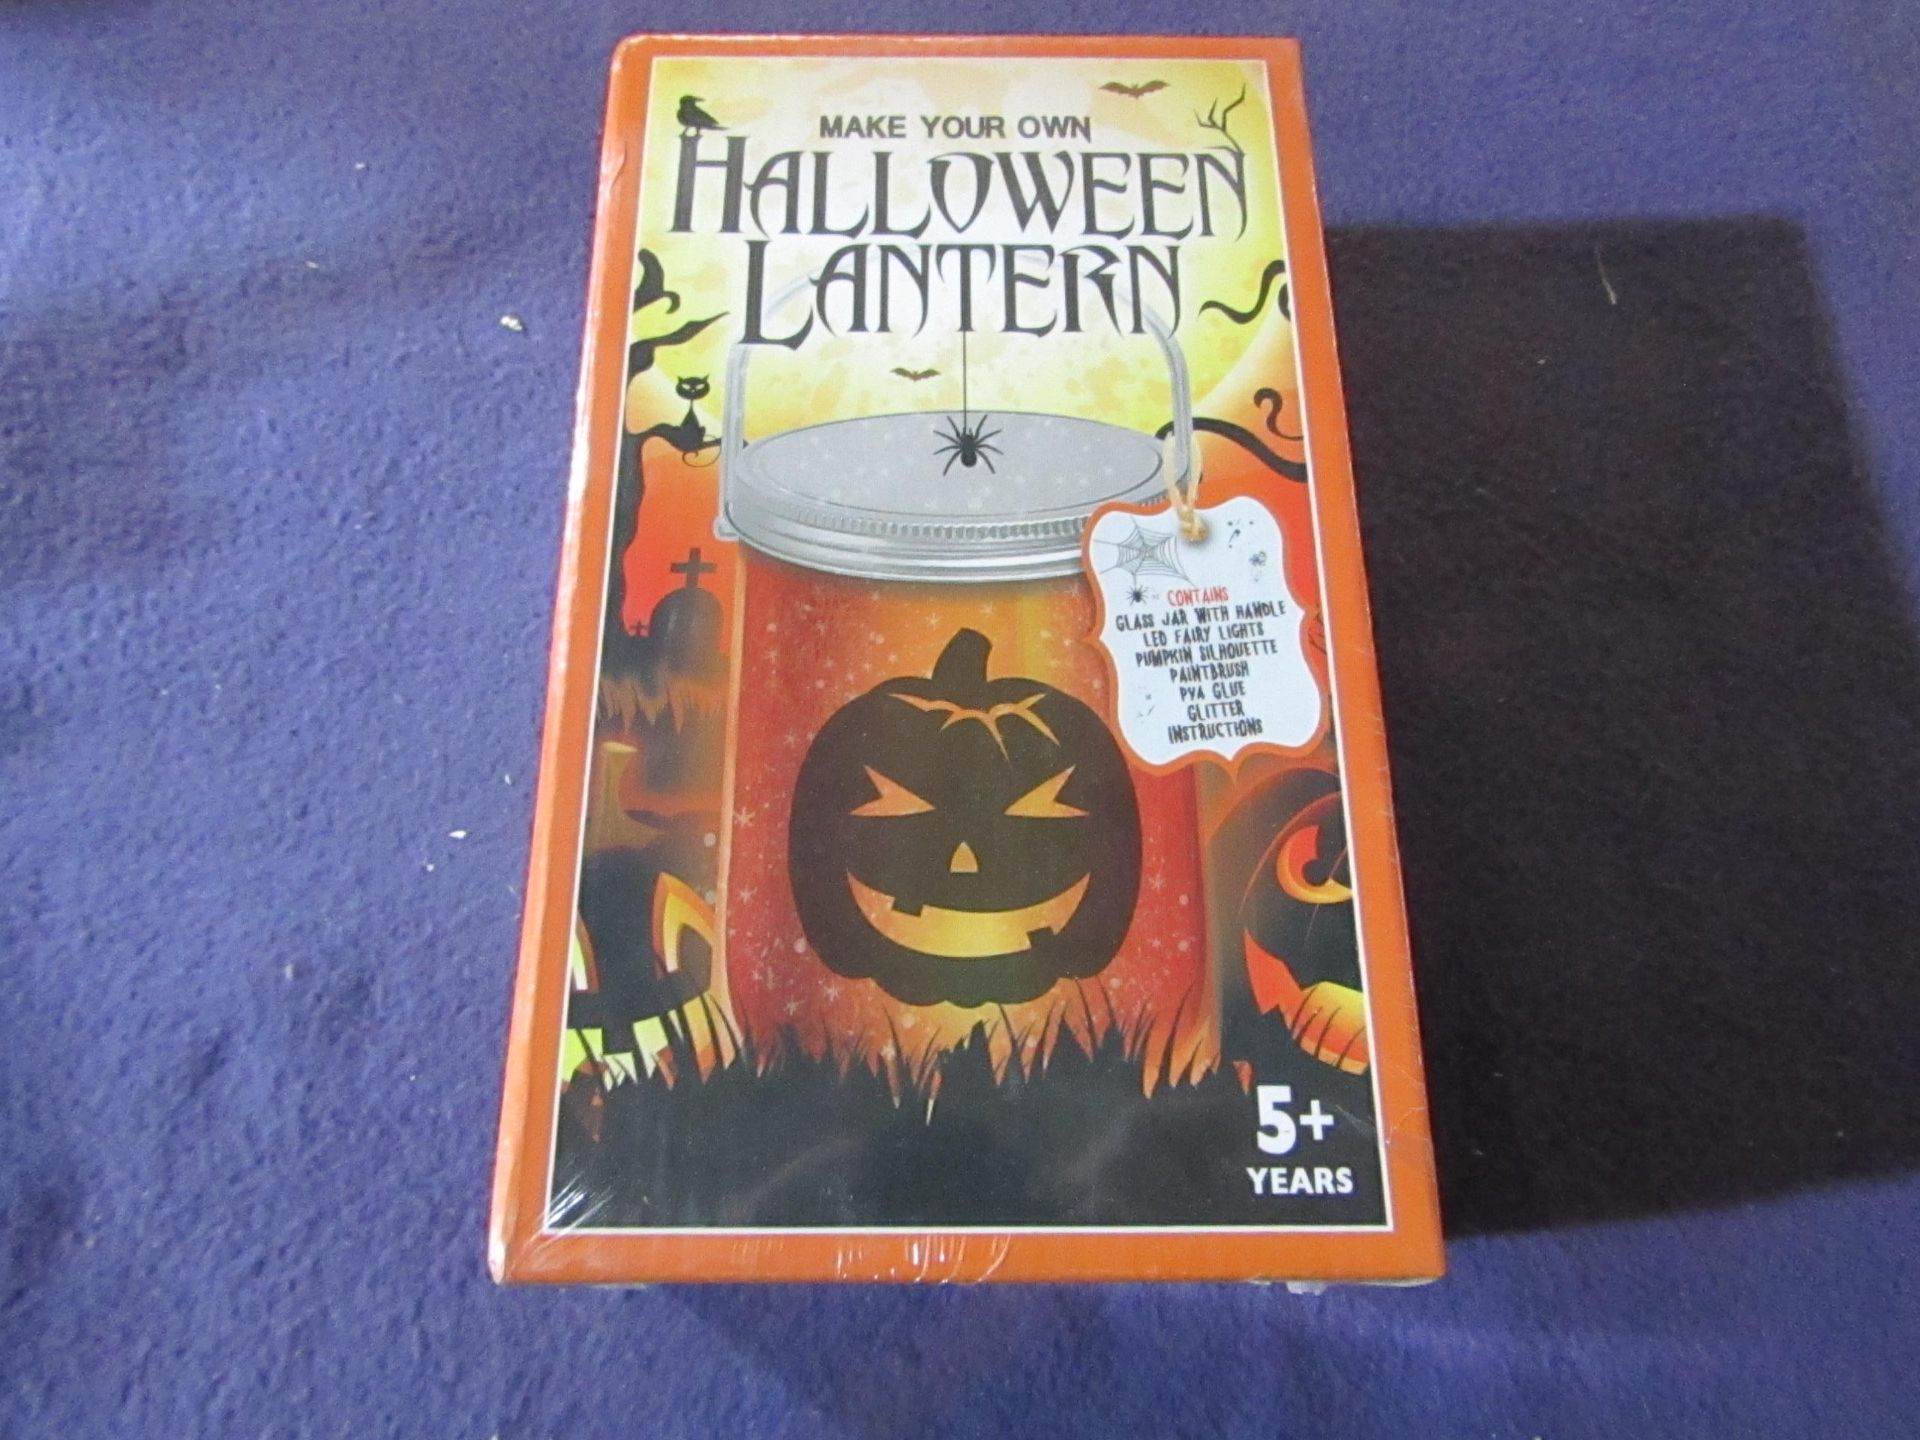 Make Your Own Halloween Lantern - Unused & Packaged.